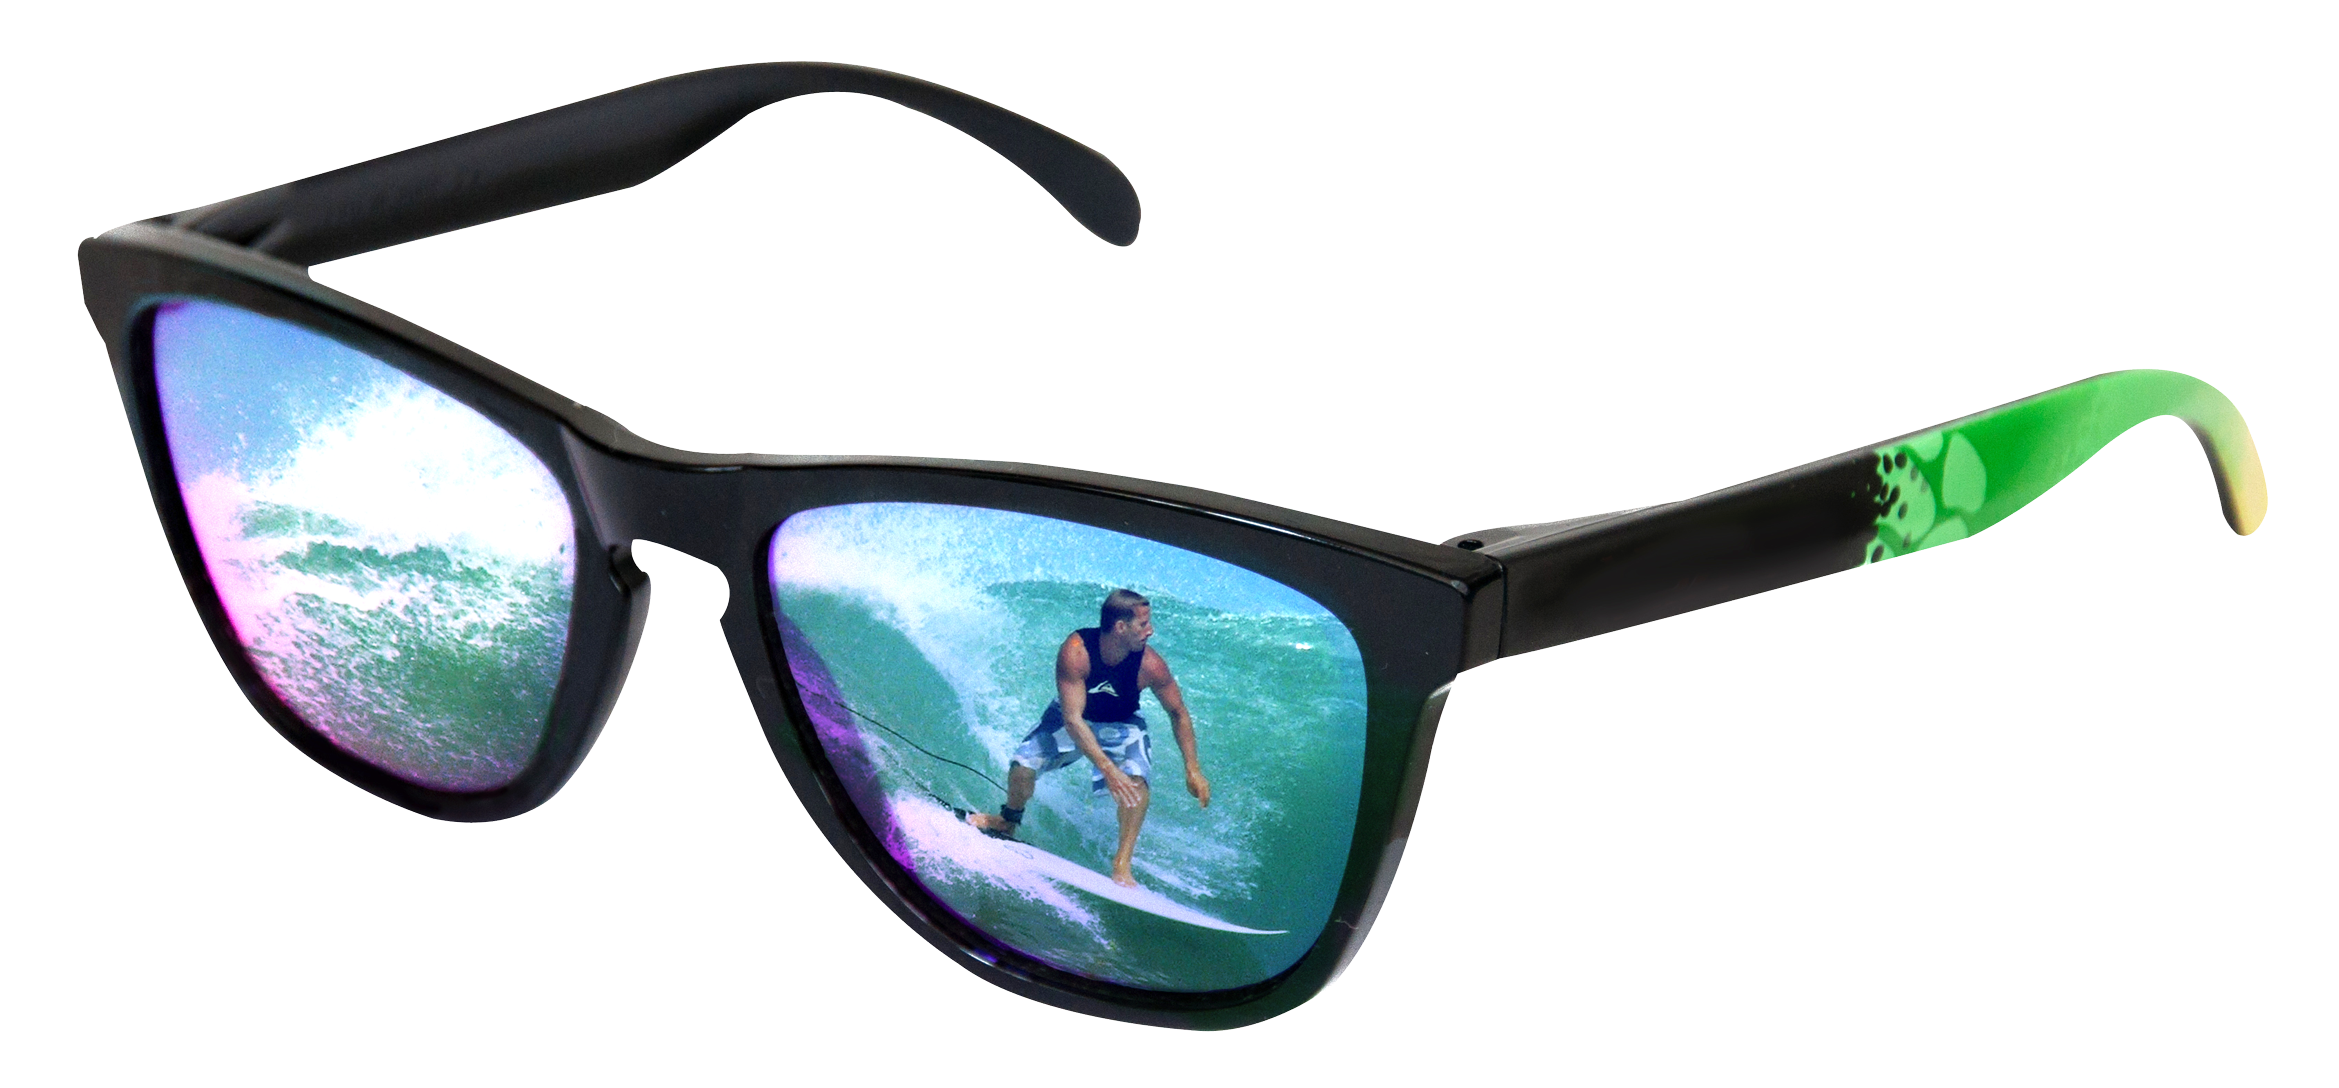 Eyeglass Sunglasses Reflection Eyewear Surfer Lens Prescription Clipart